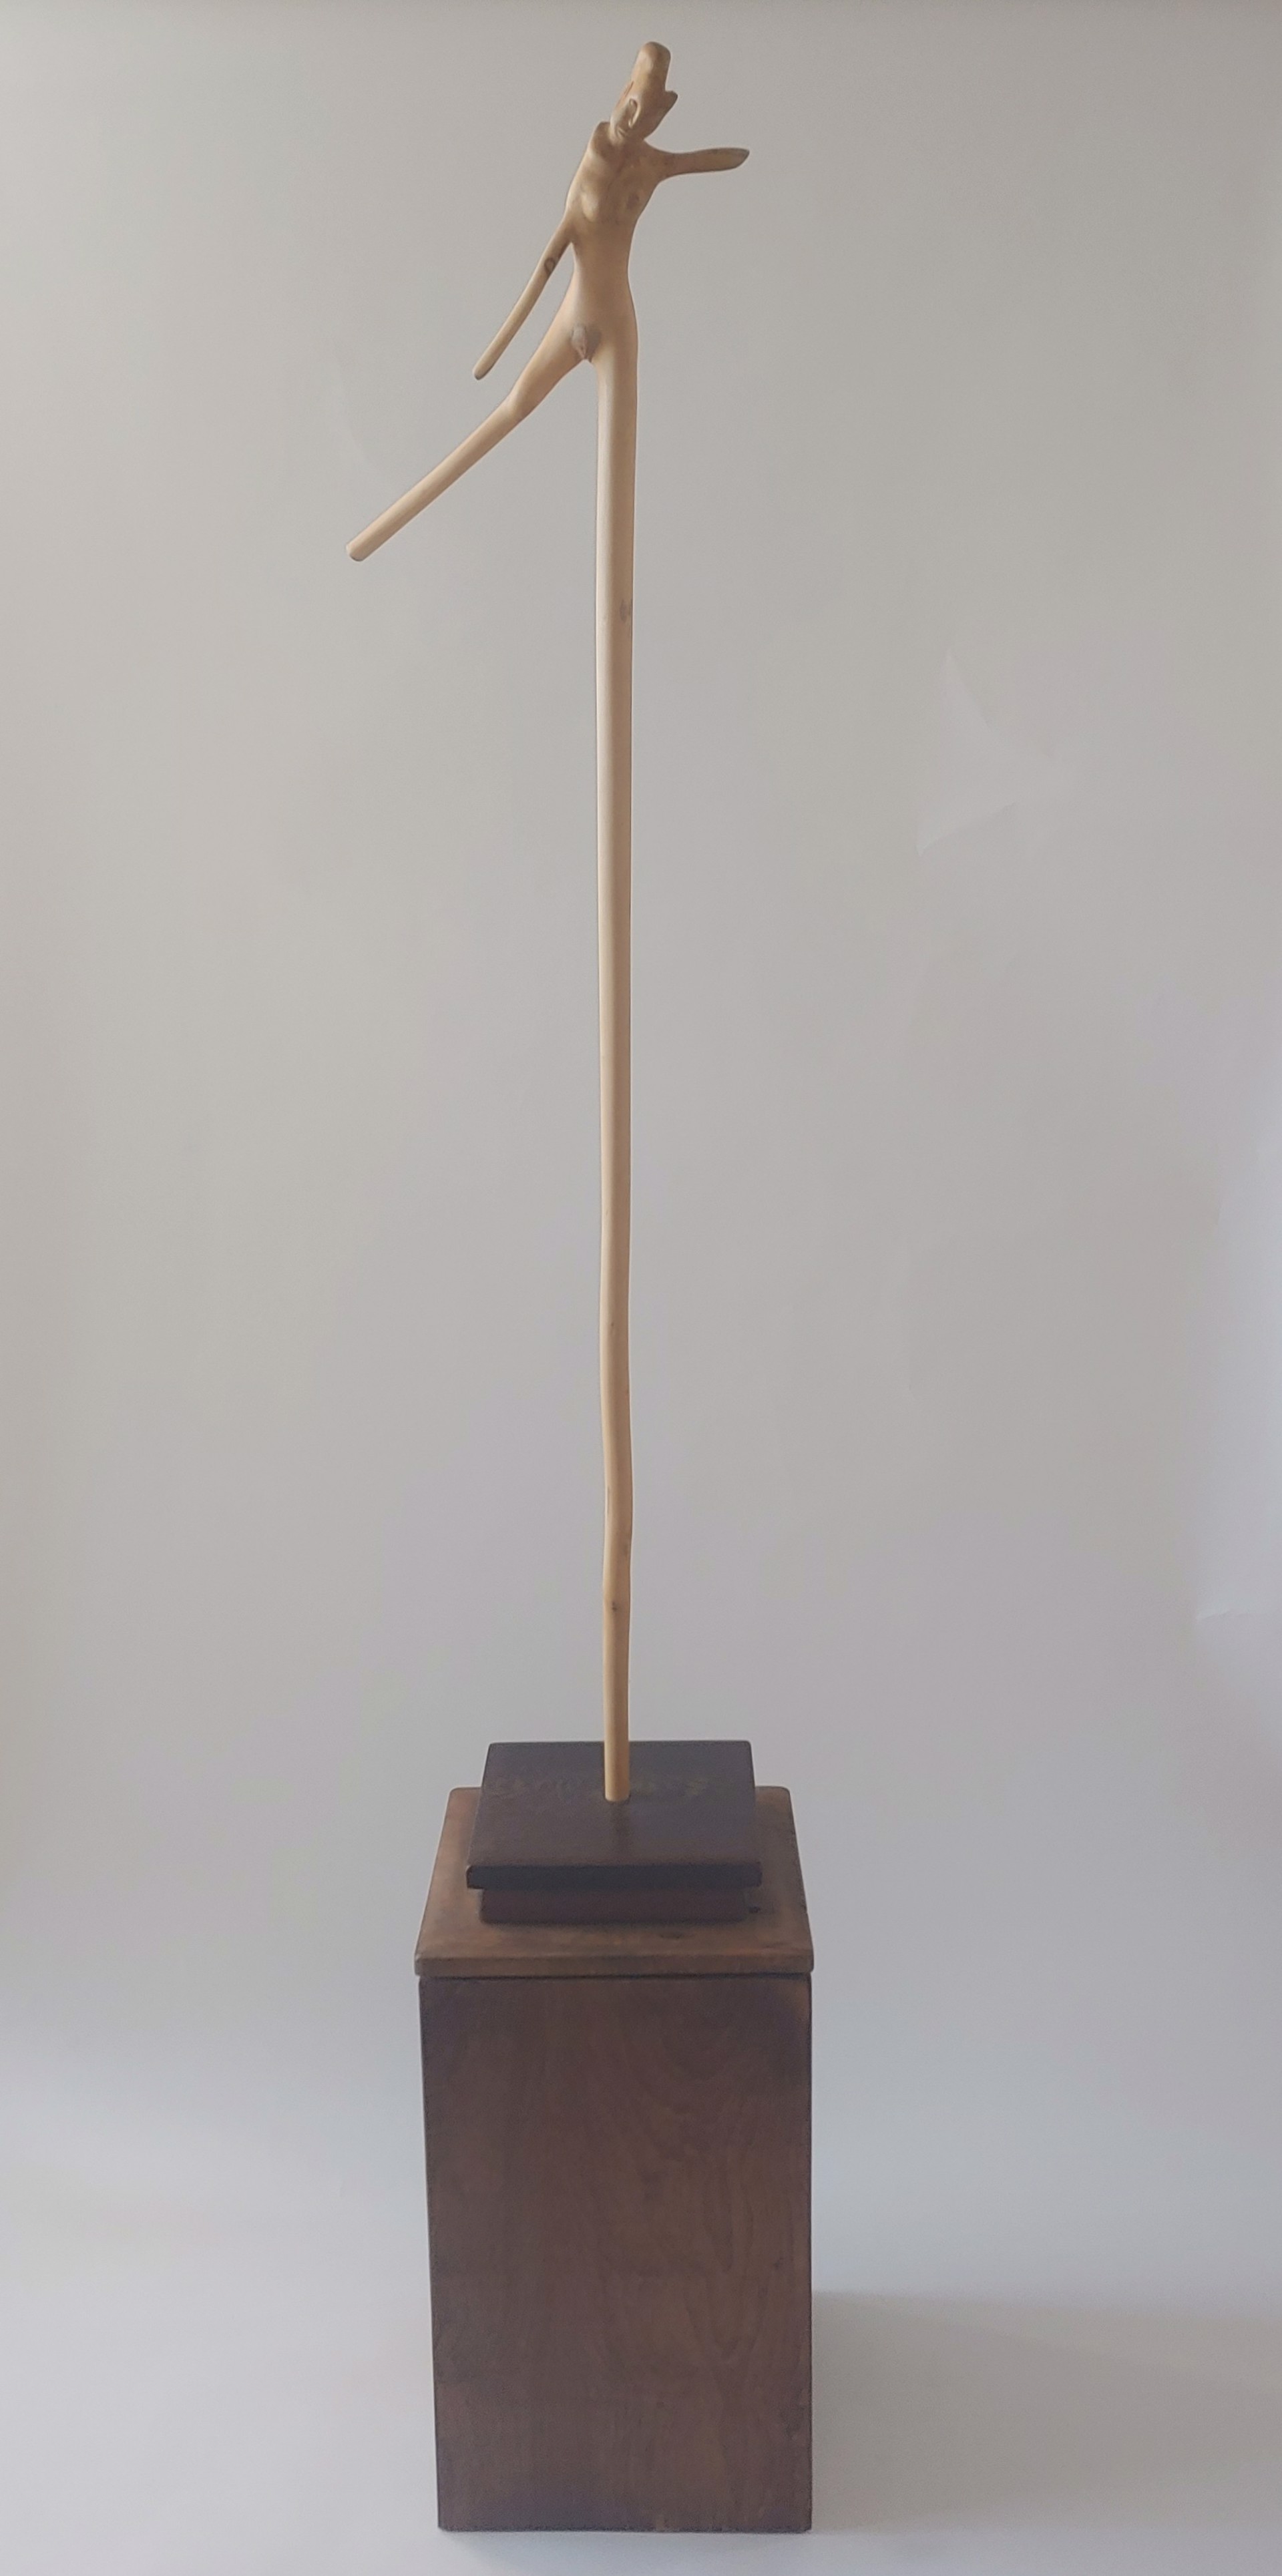 Anjelique Walking Stick on Rolling Base - Wood Sculpture by David Amdur